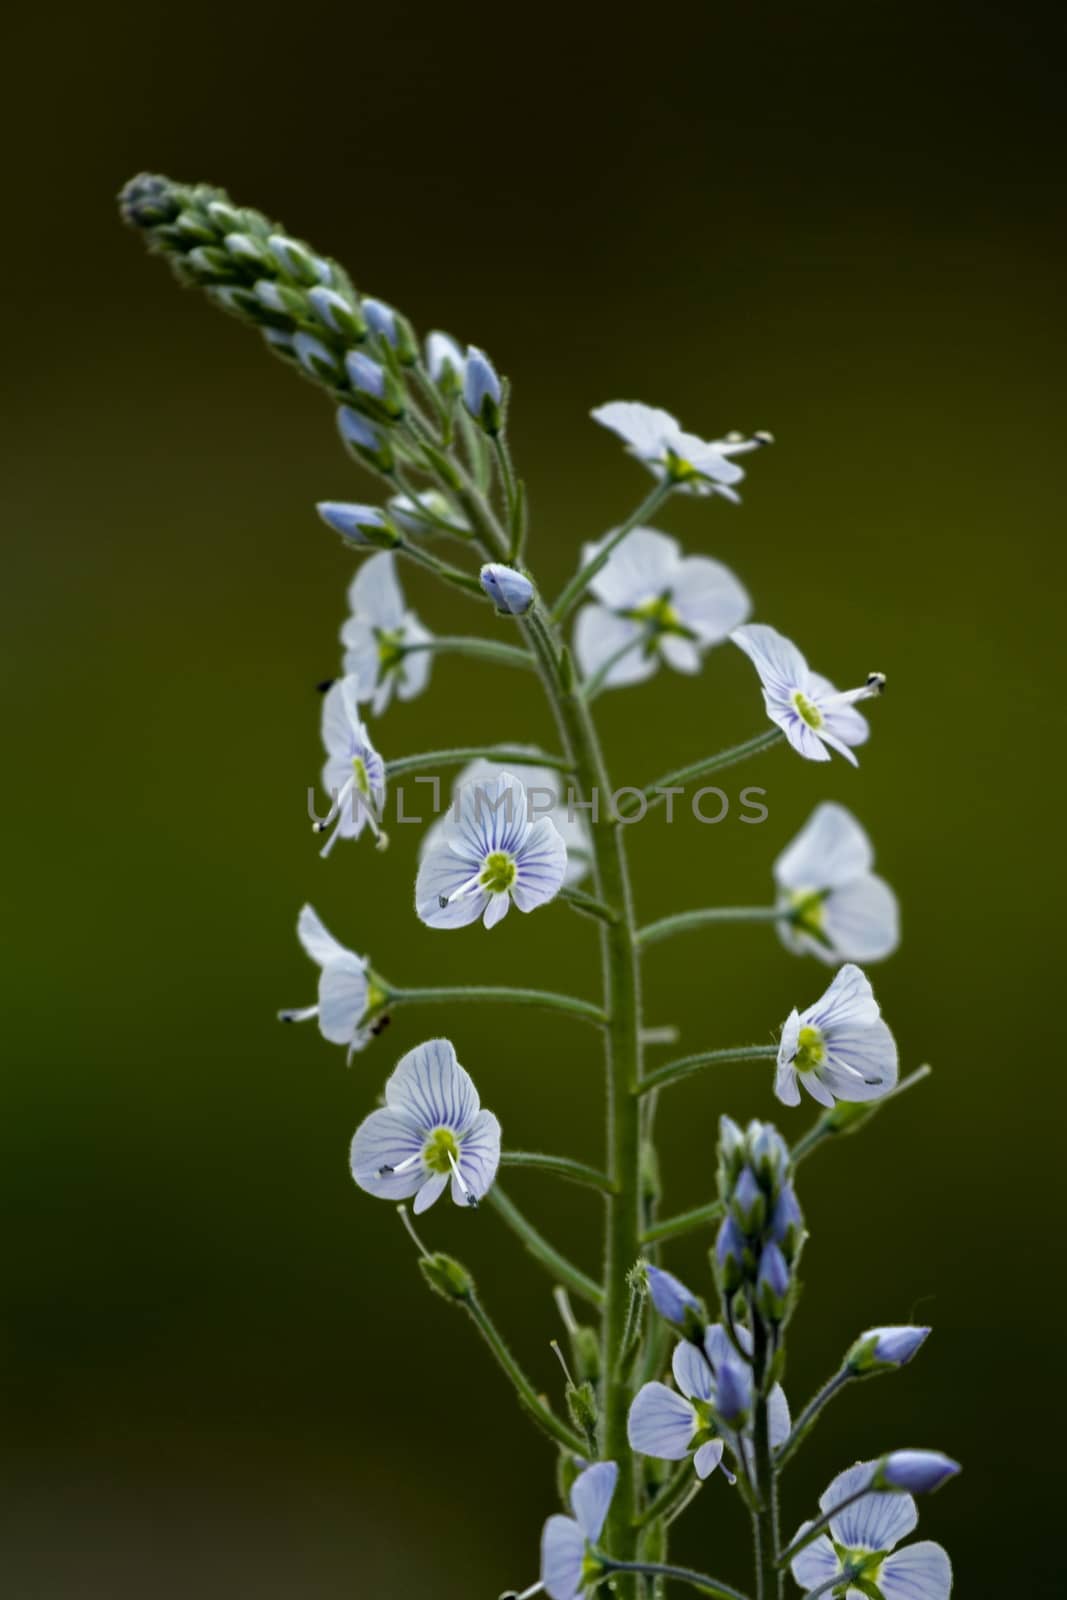 Gentian speedwell, Veronica gentianoides flower plant by Elenaphotos21